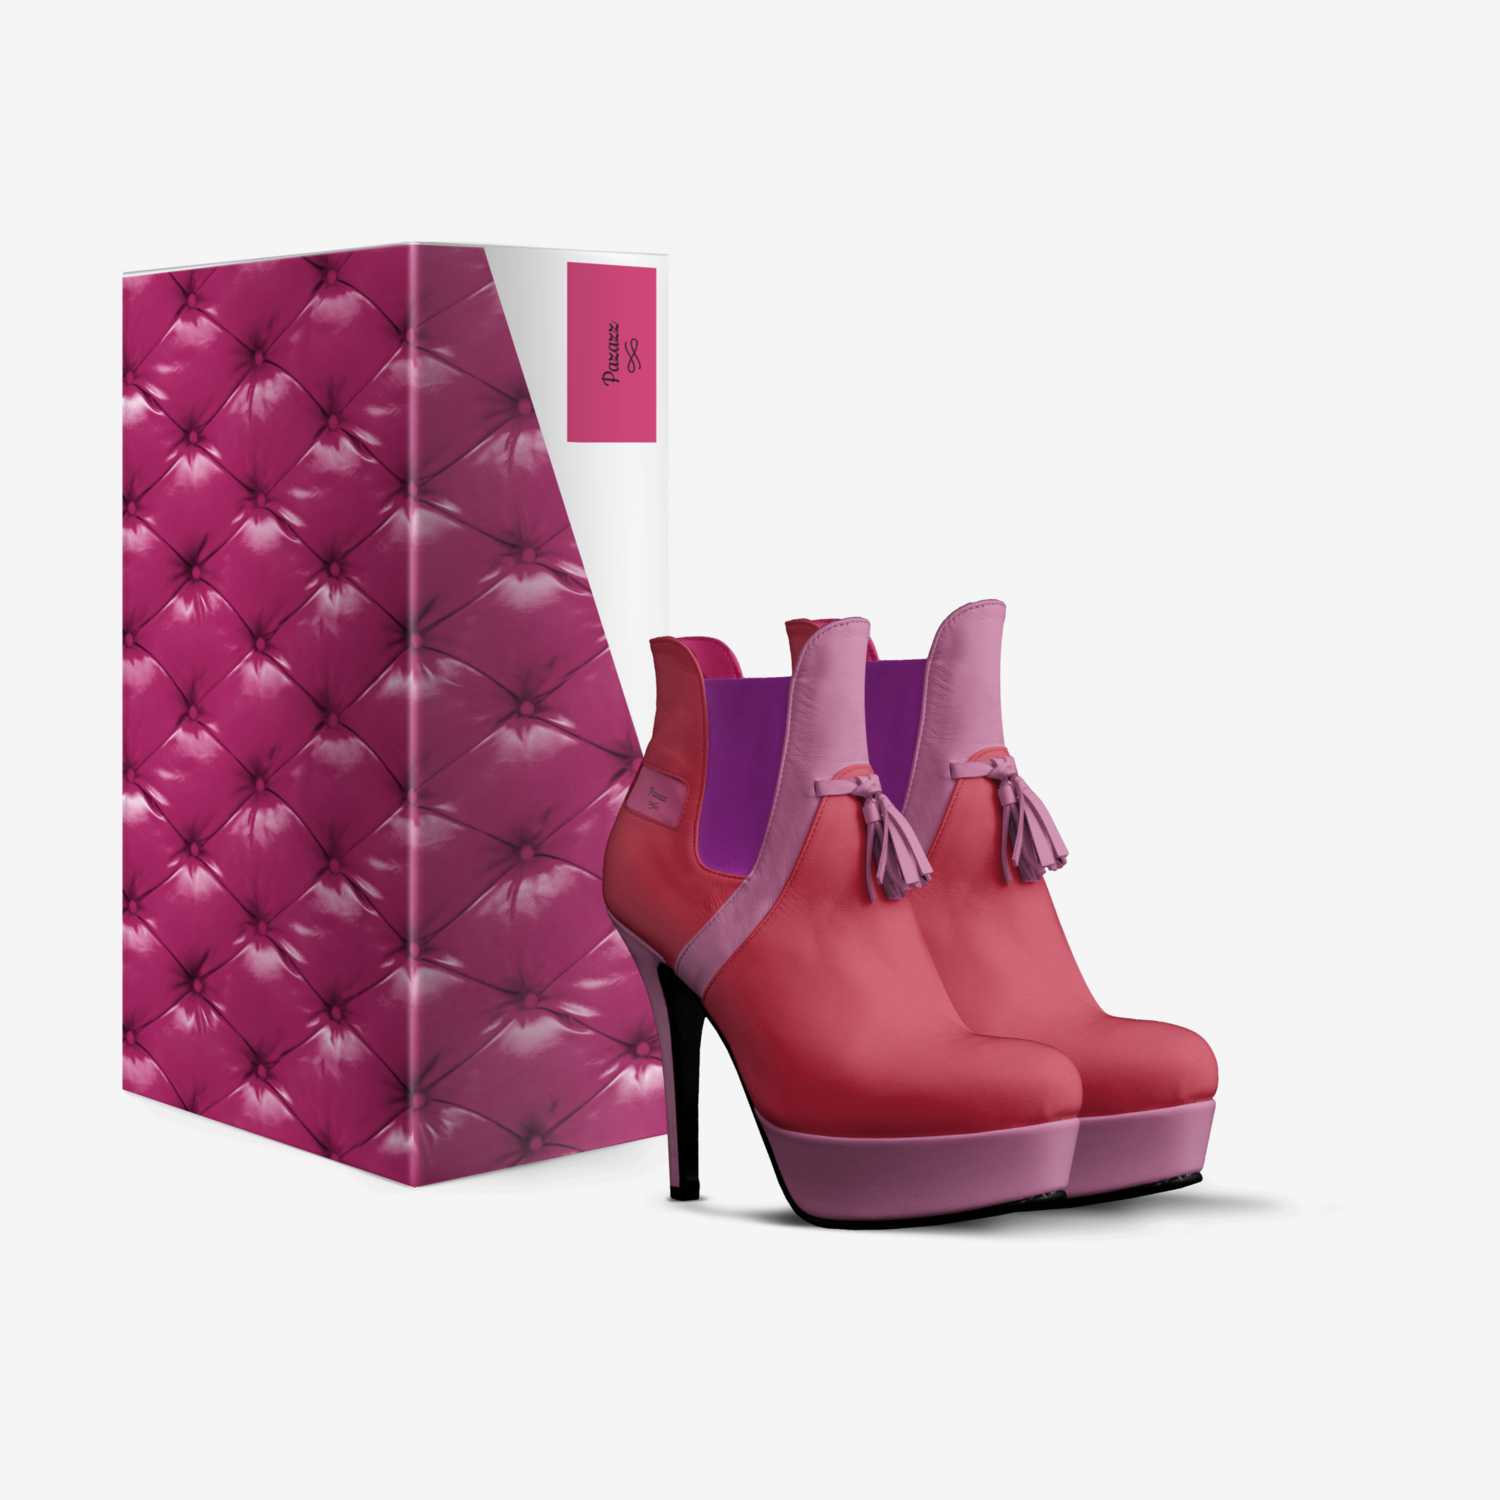 Pazazz custom made in Italy shoes by Gogo Kapri | Box view